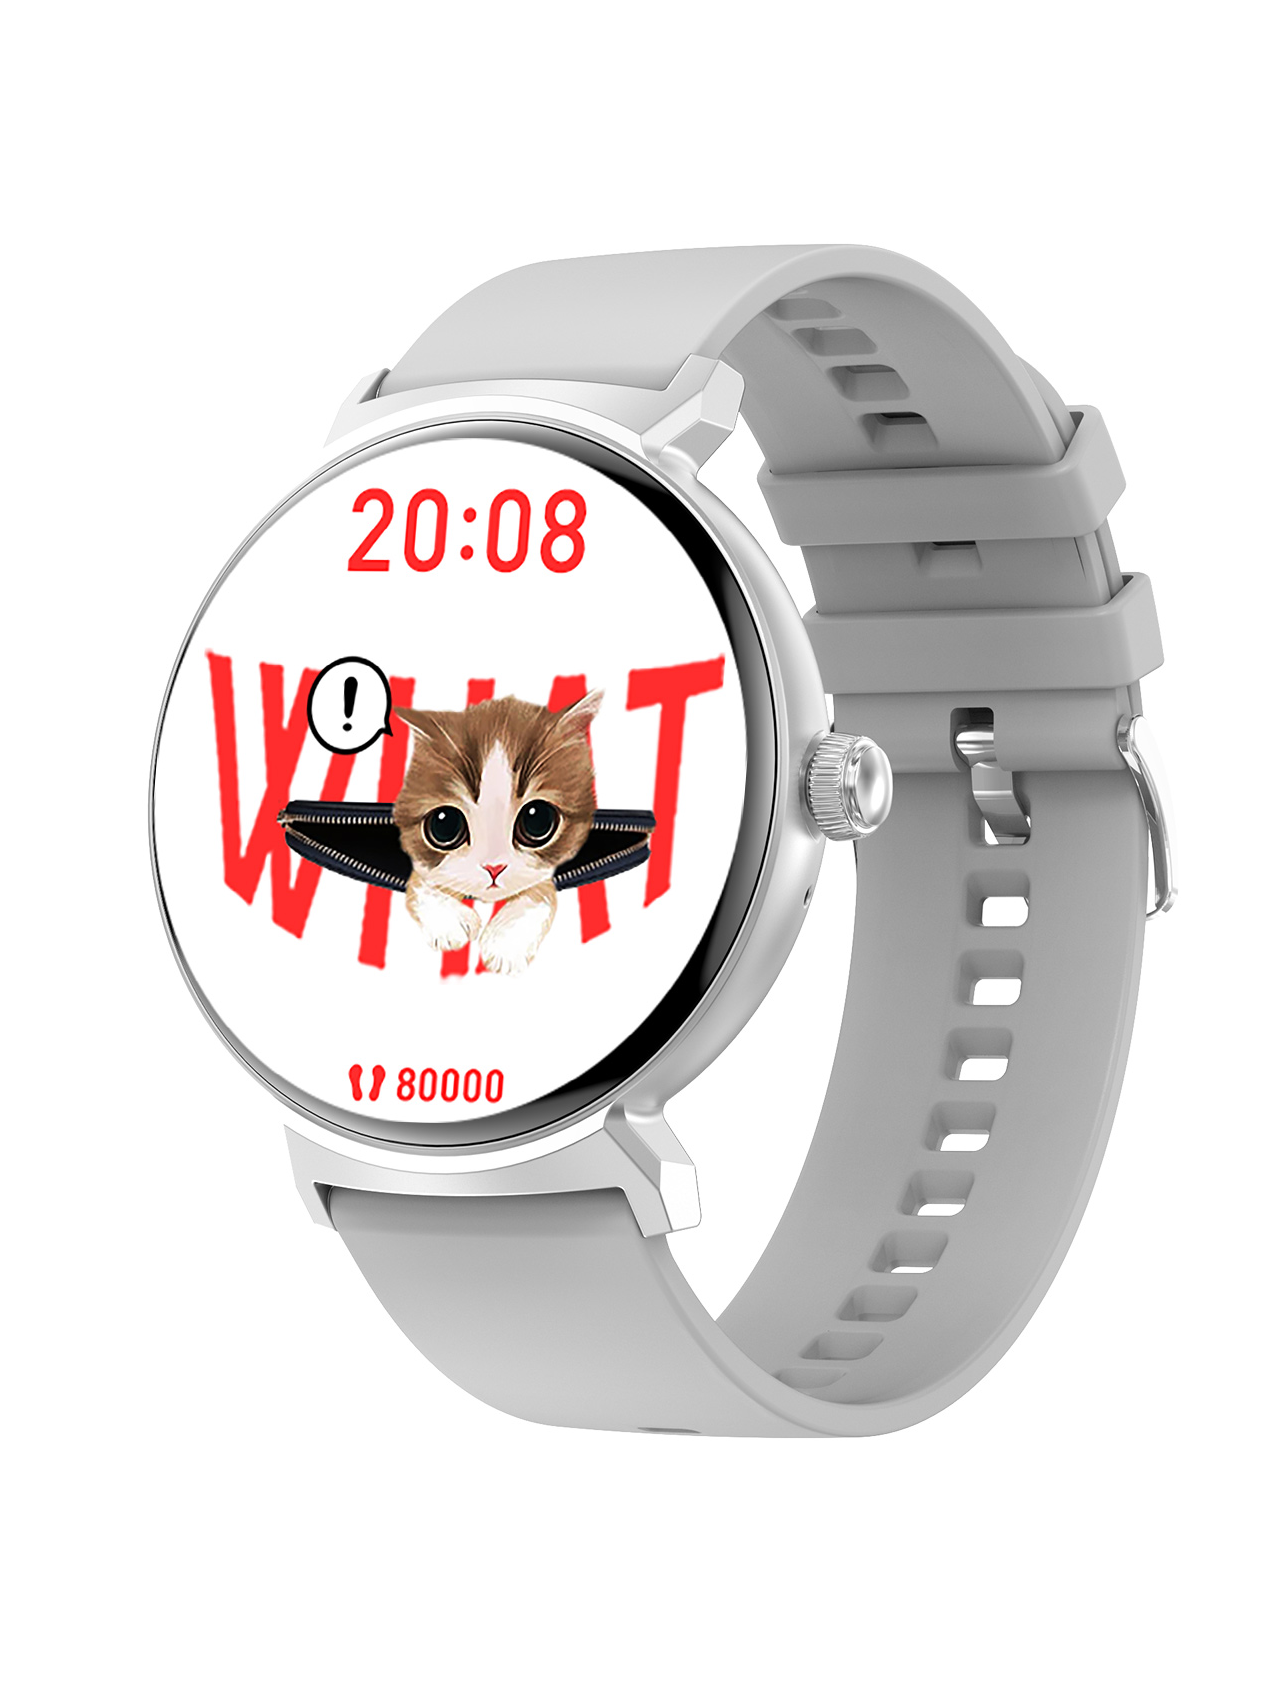 Cмарт-часы Smart Watch DT 4 New